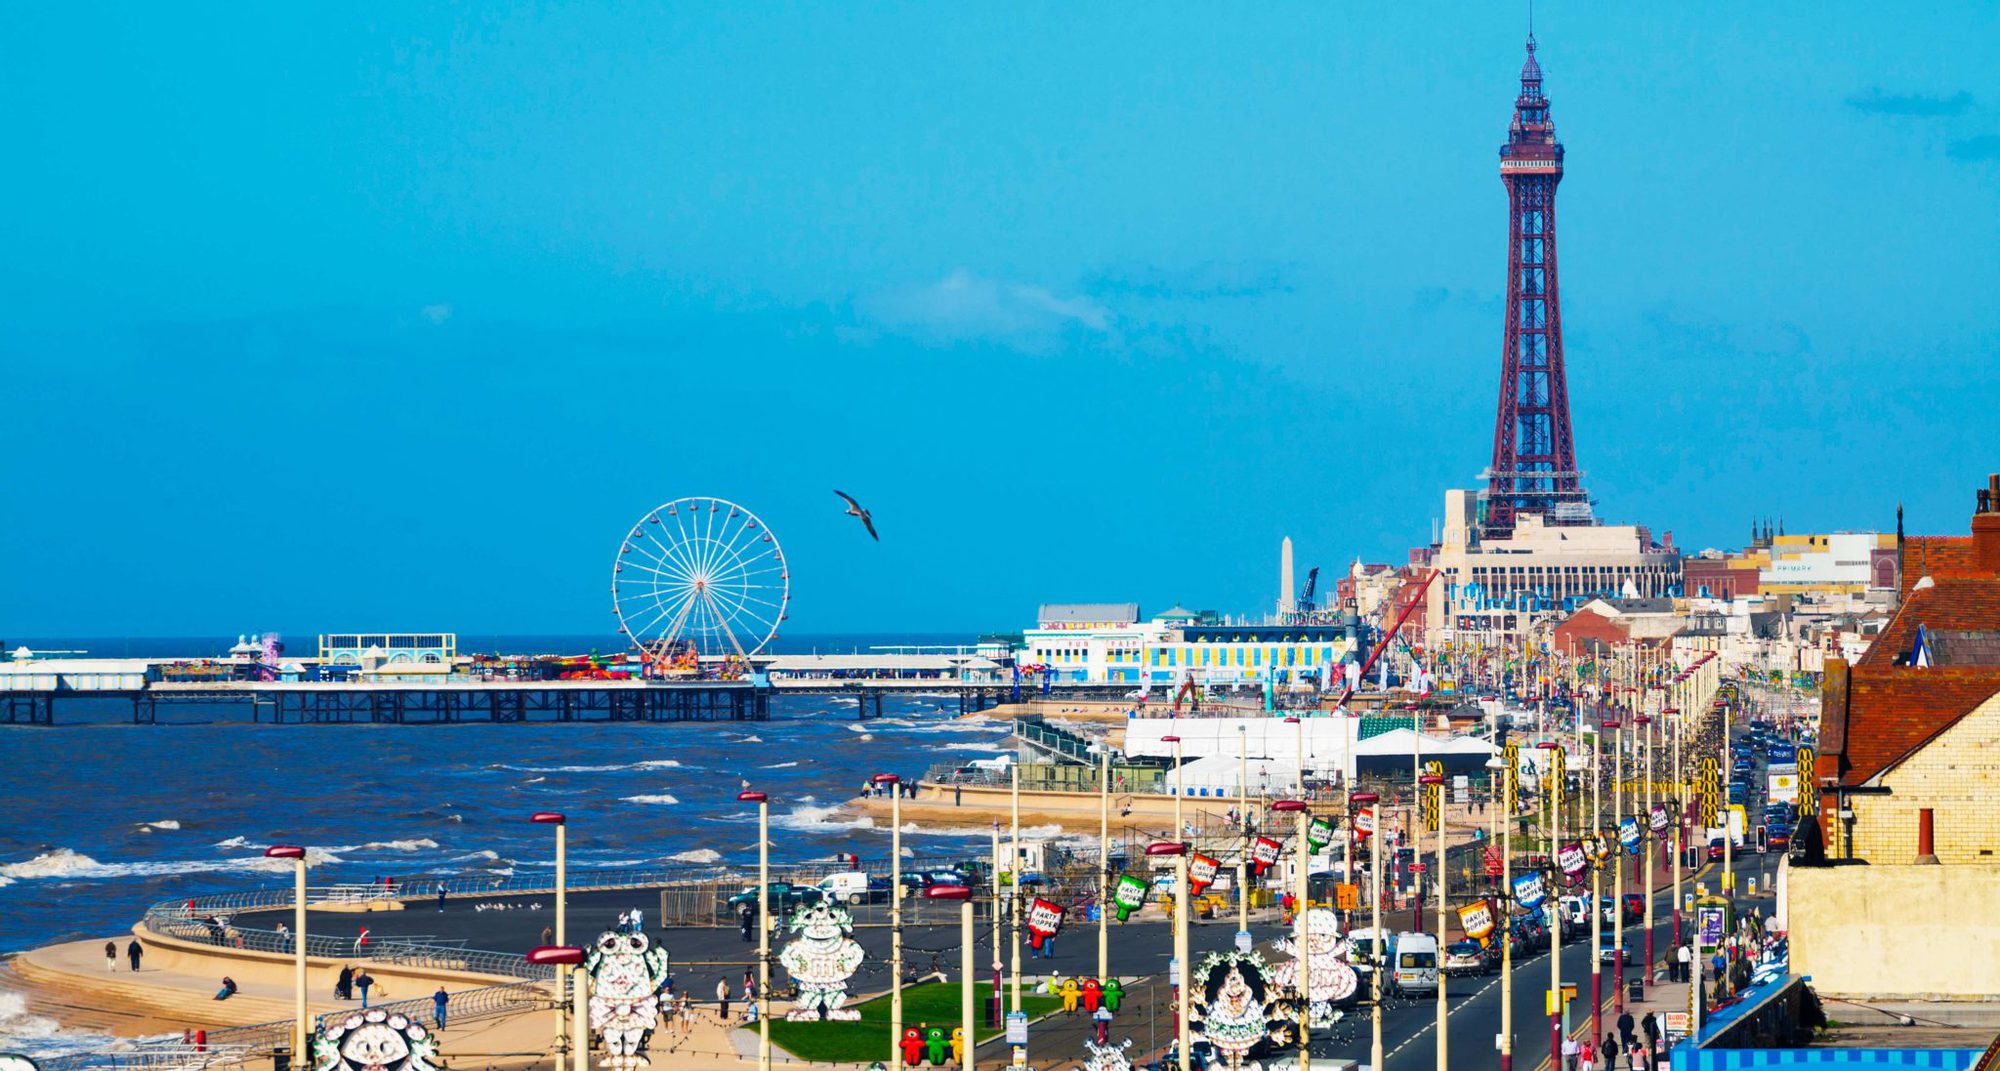 Rebalancing Britain Blackpool has had some dark days but its future